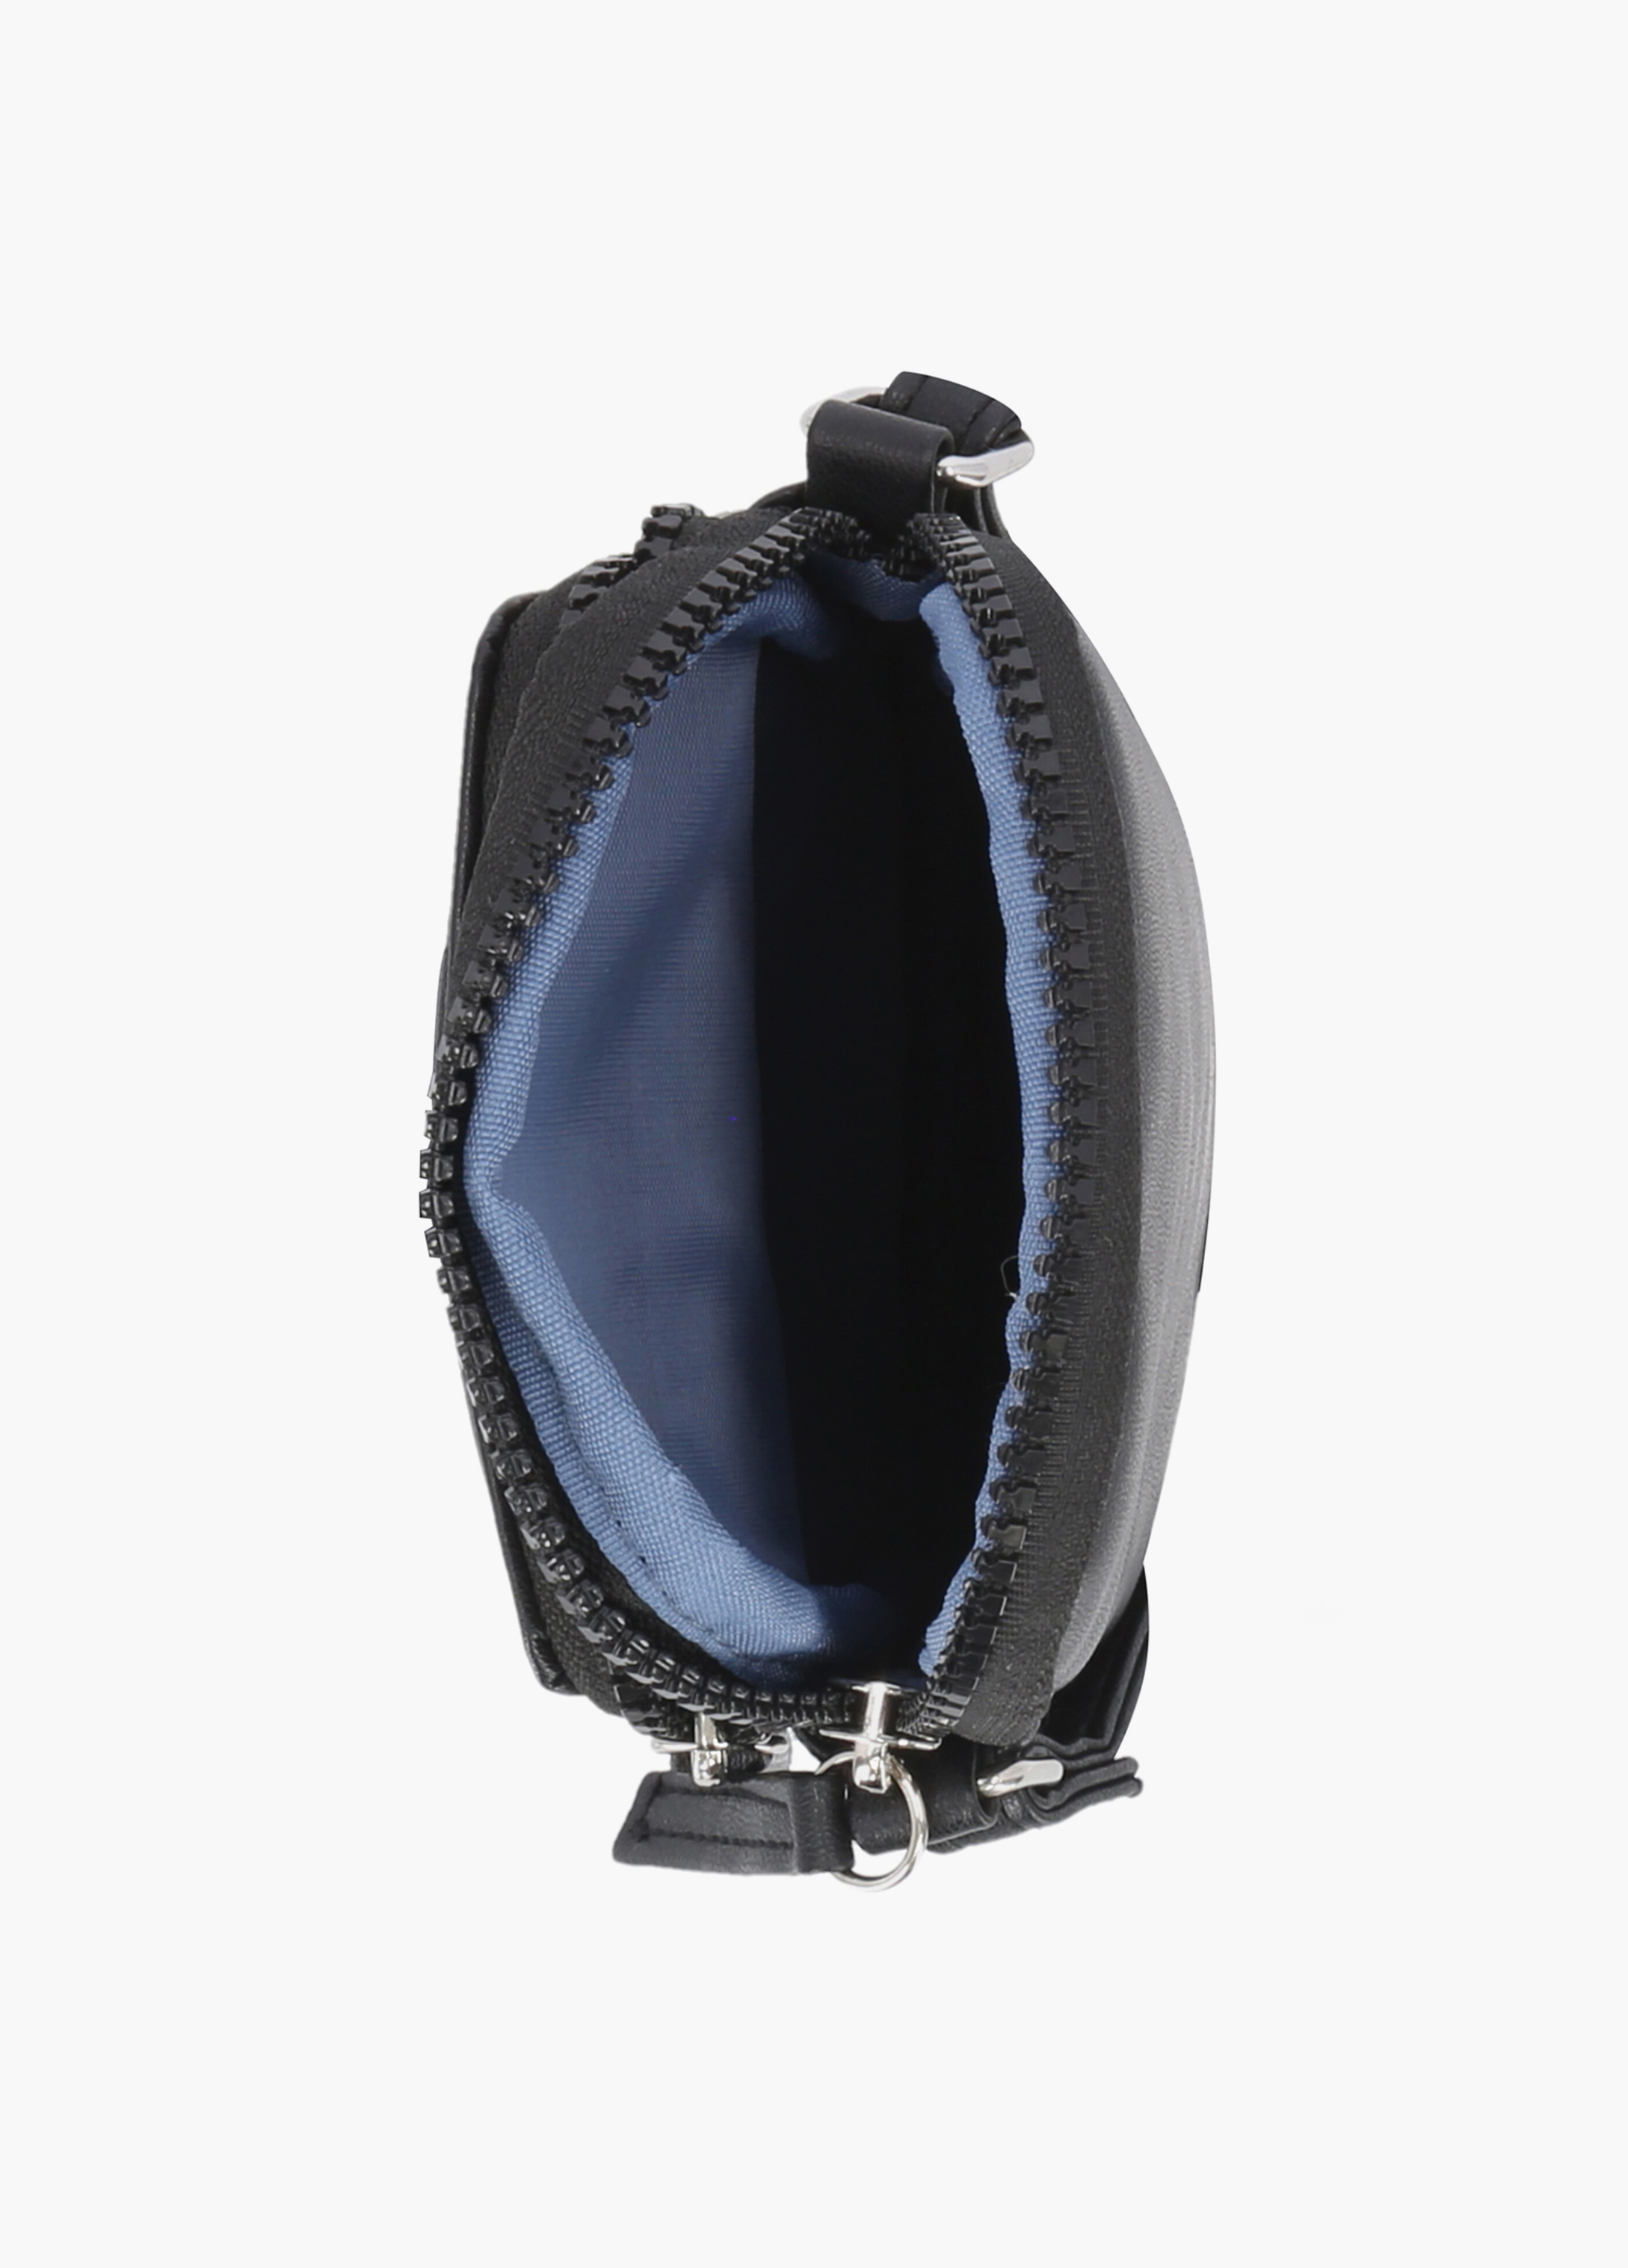 Nautica Billow Phone Bag Luxe For Less Designer Crossbody Bags